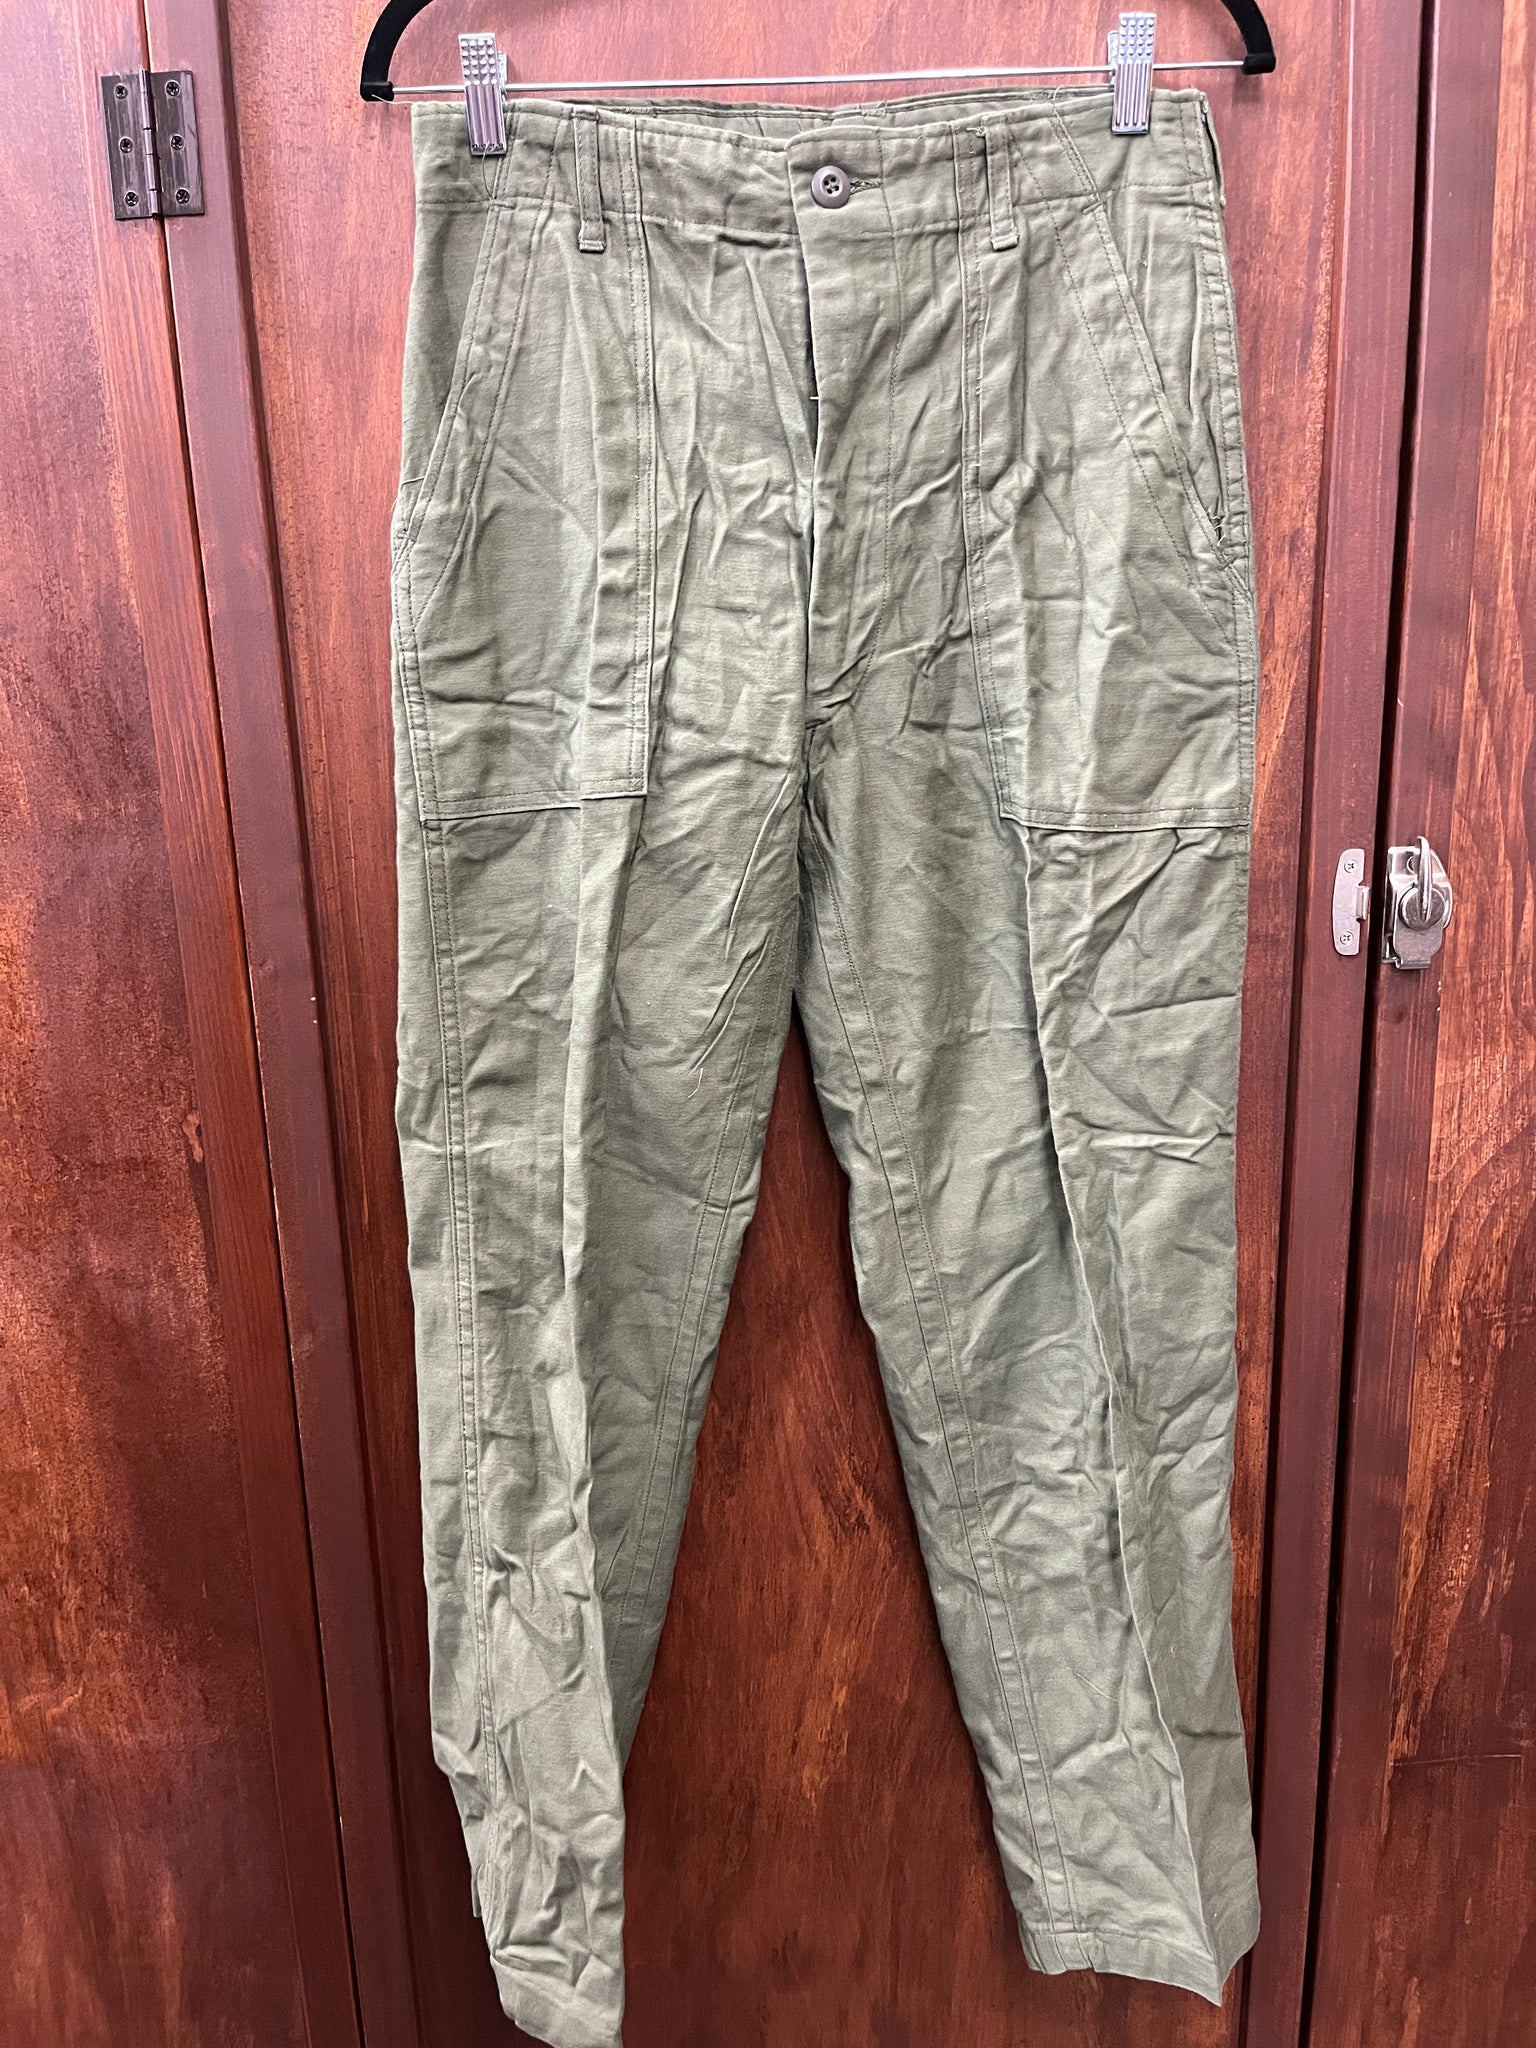 1960s MENS PANTS- green cargo army pants